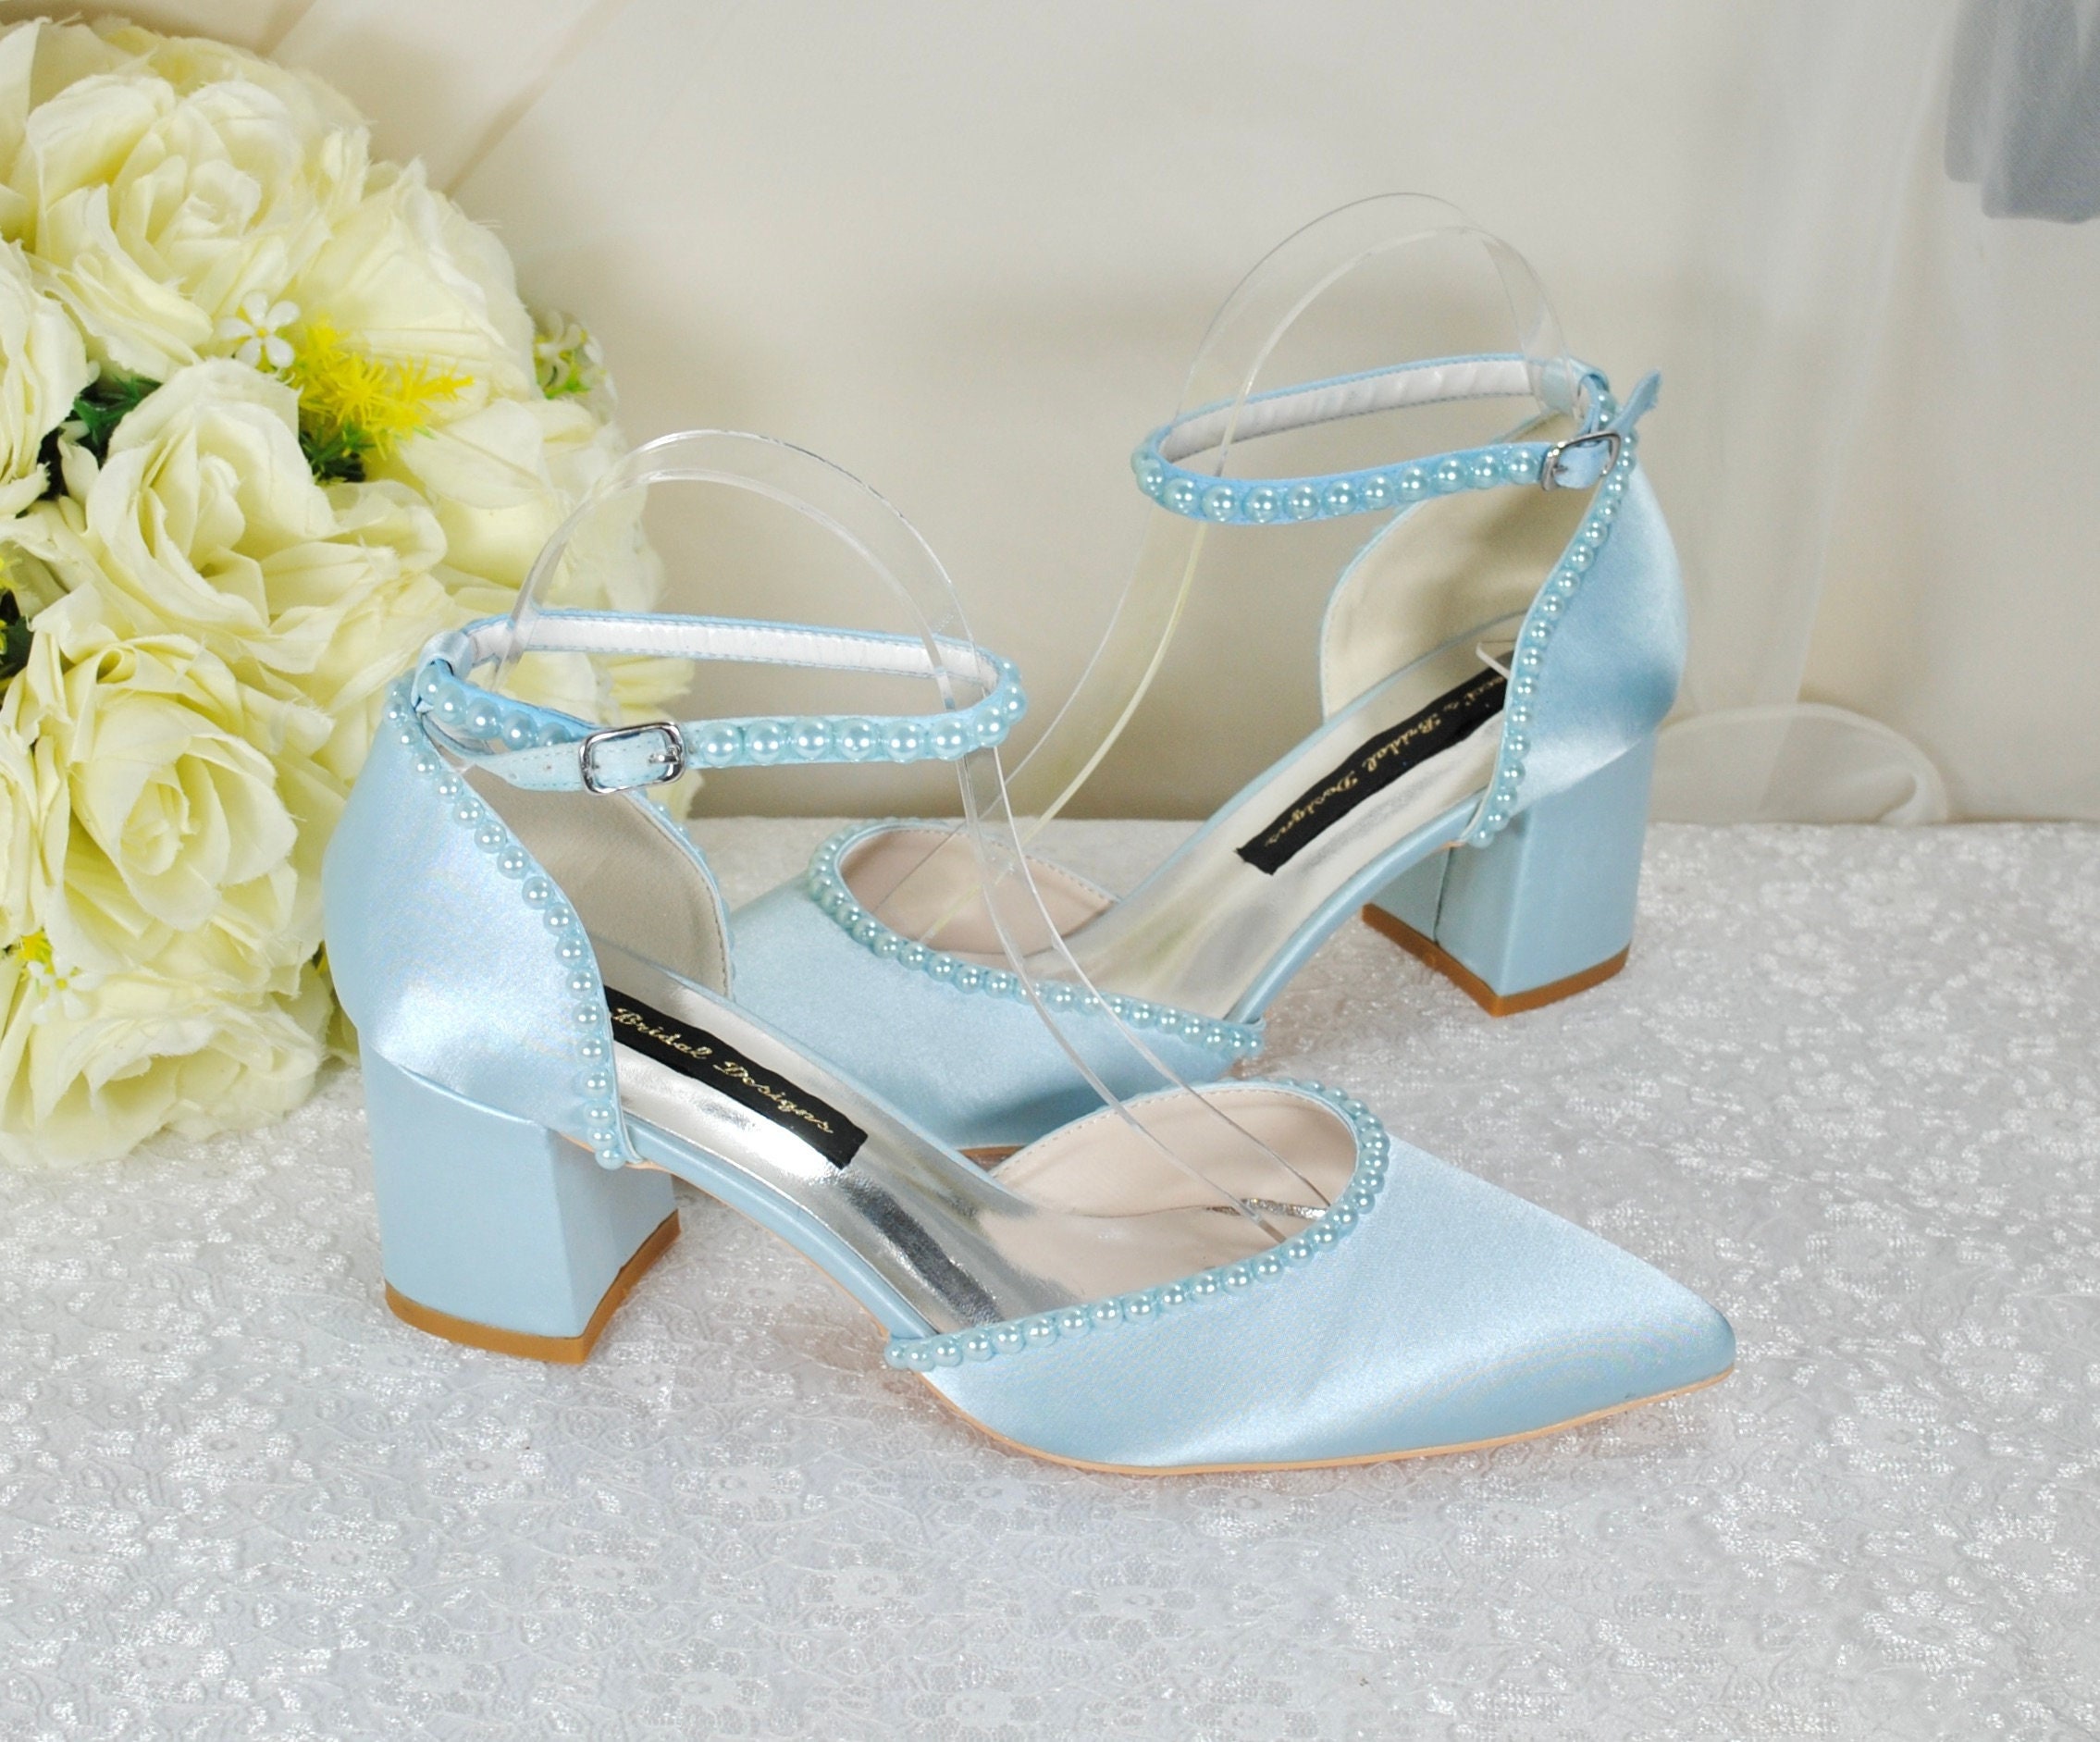 Wedding Shoes - Retro Vintage to Classic Styles | Feather shoes, Fun  wedding shoes, Blue wedding shoes low heel